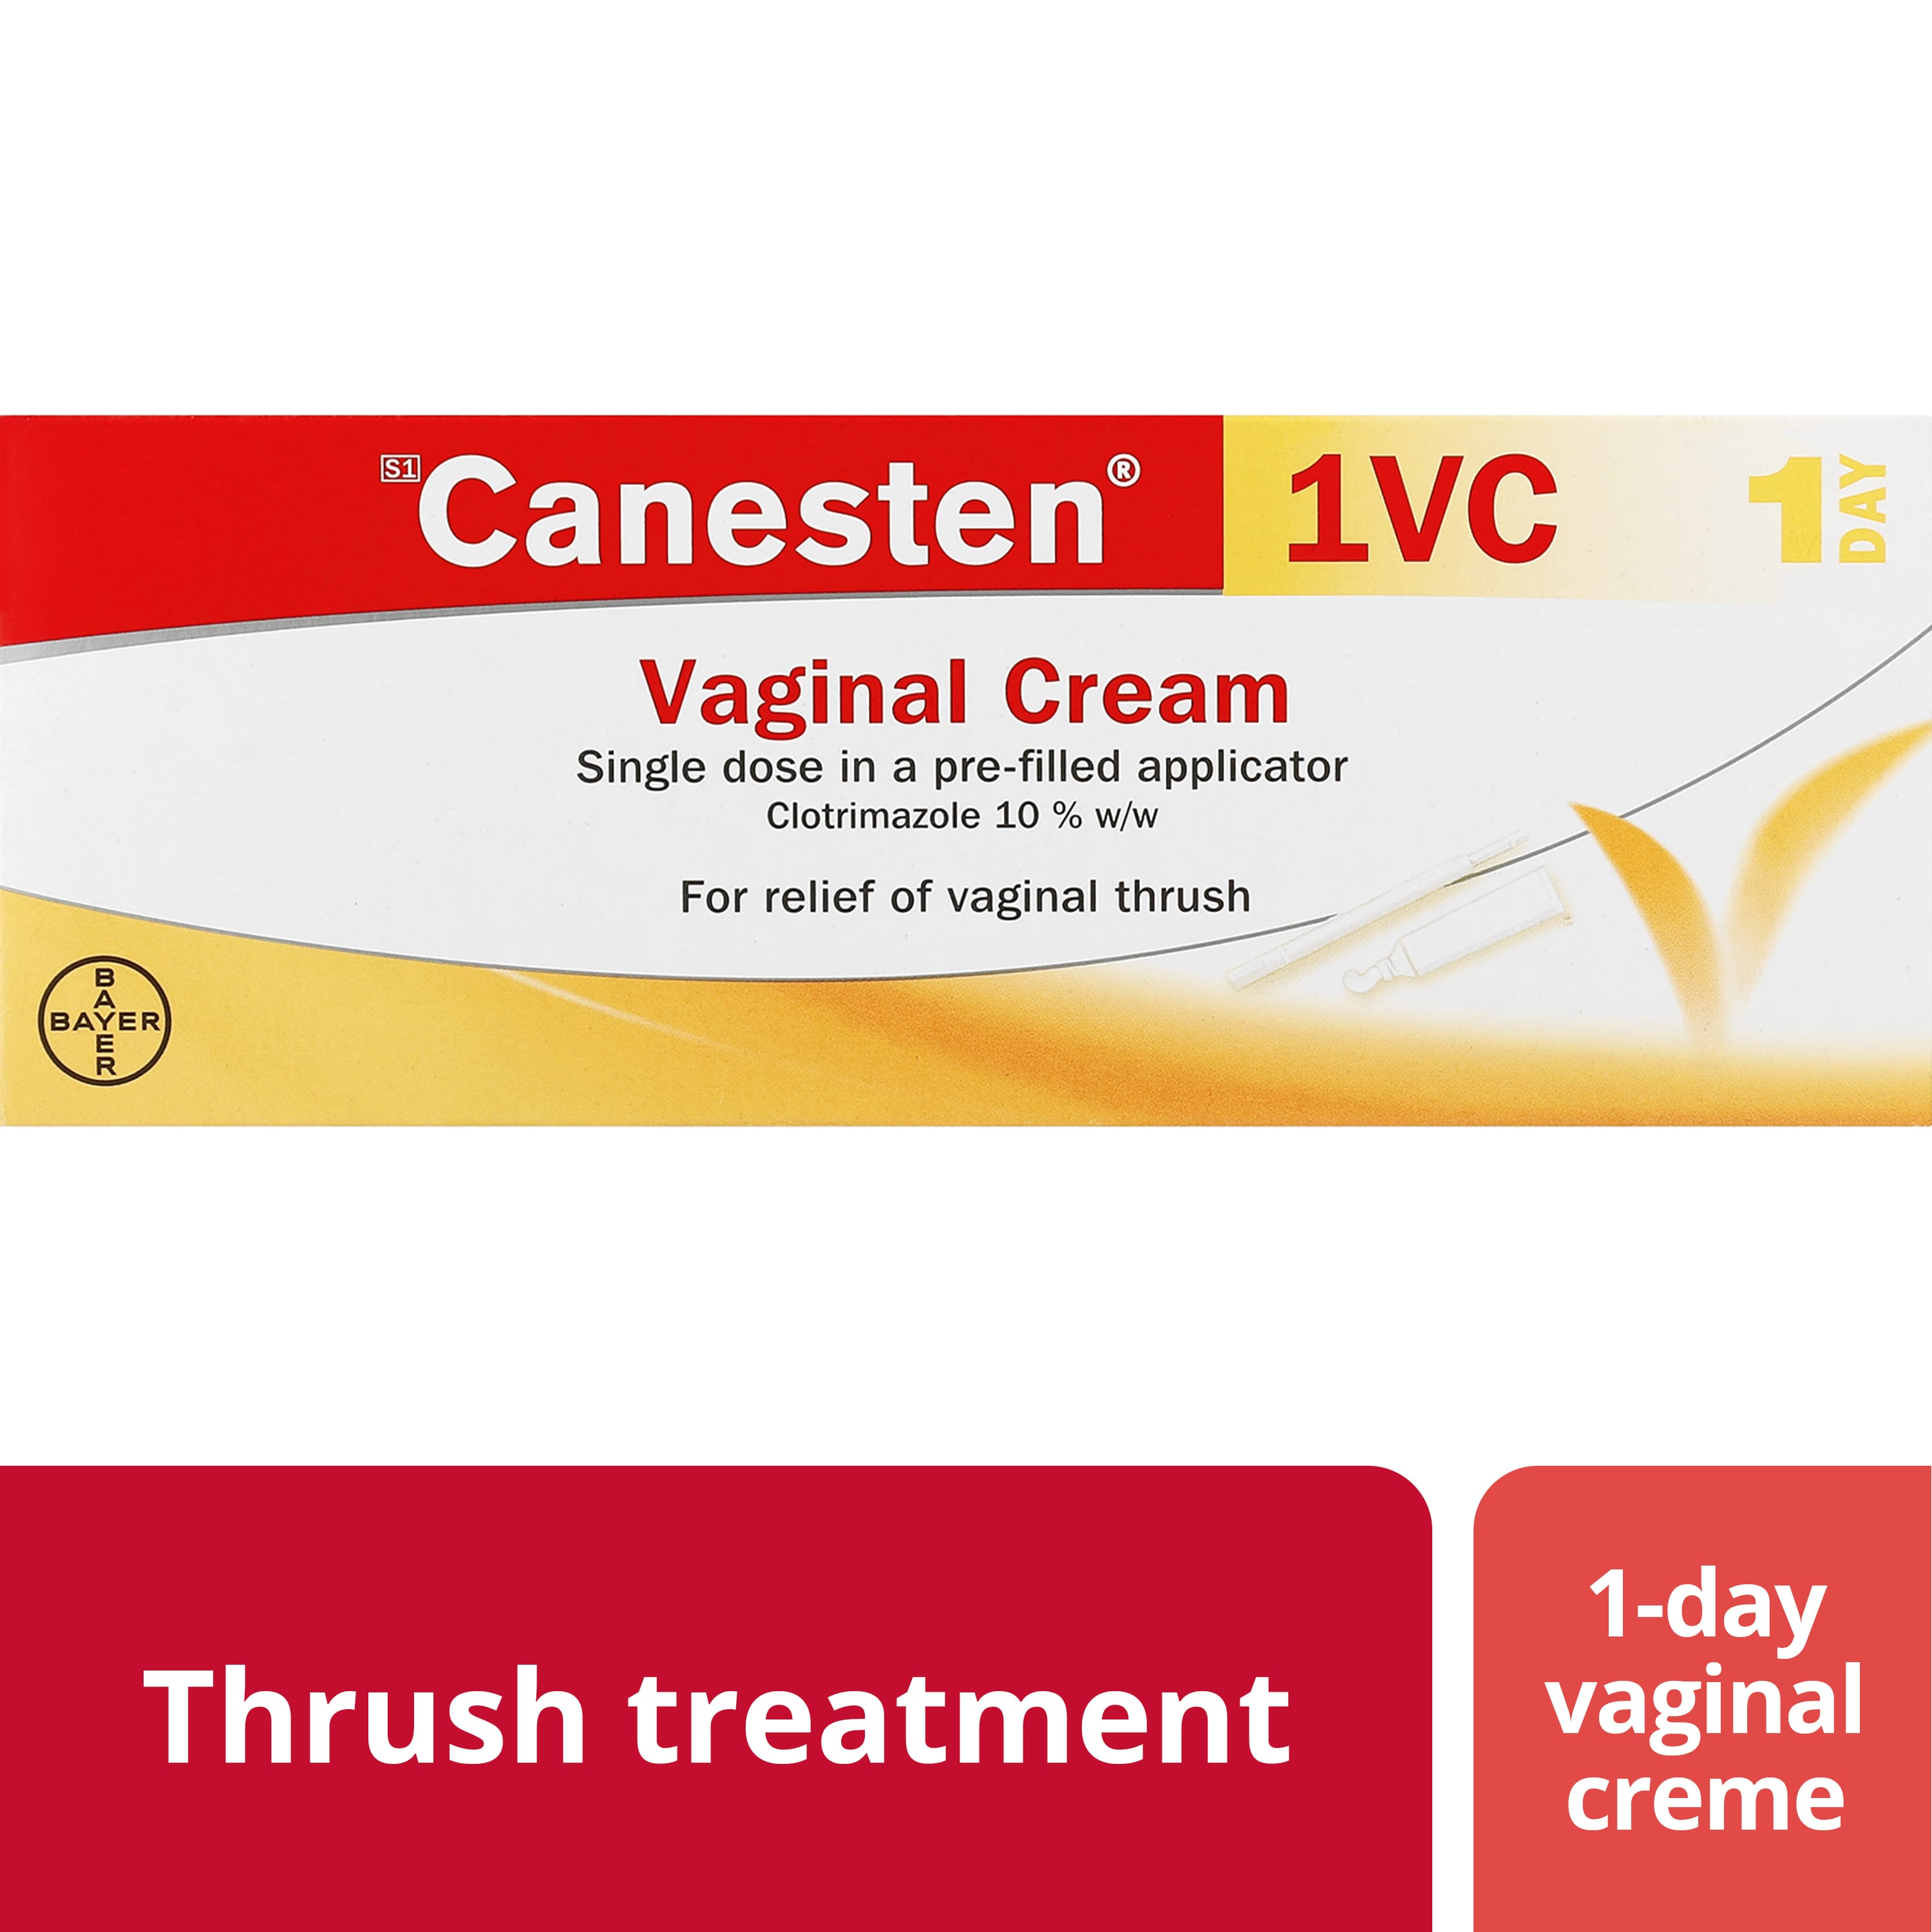 Canesten Clotrimazole Cream Full Prescribing Information, Dosage